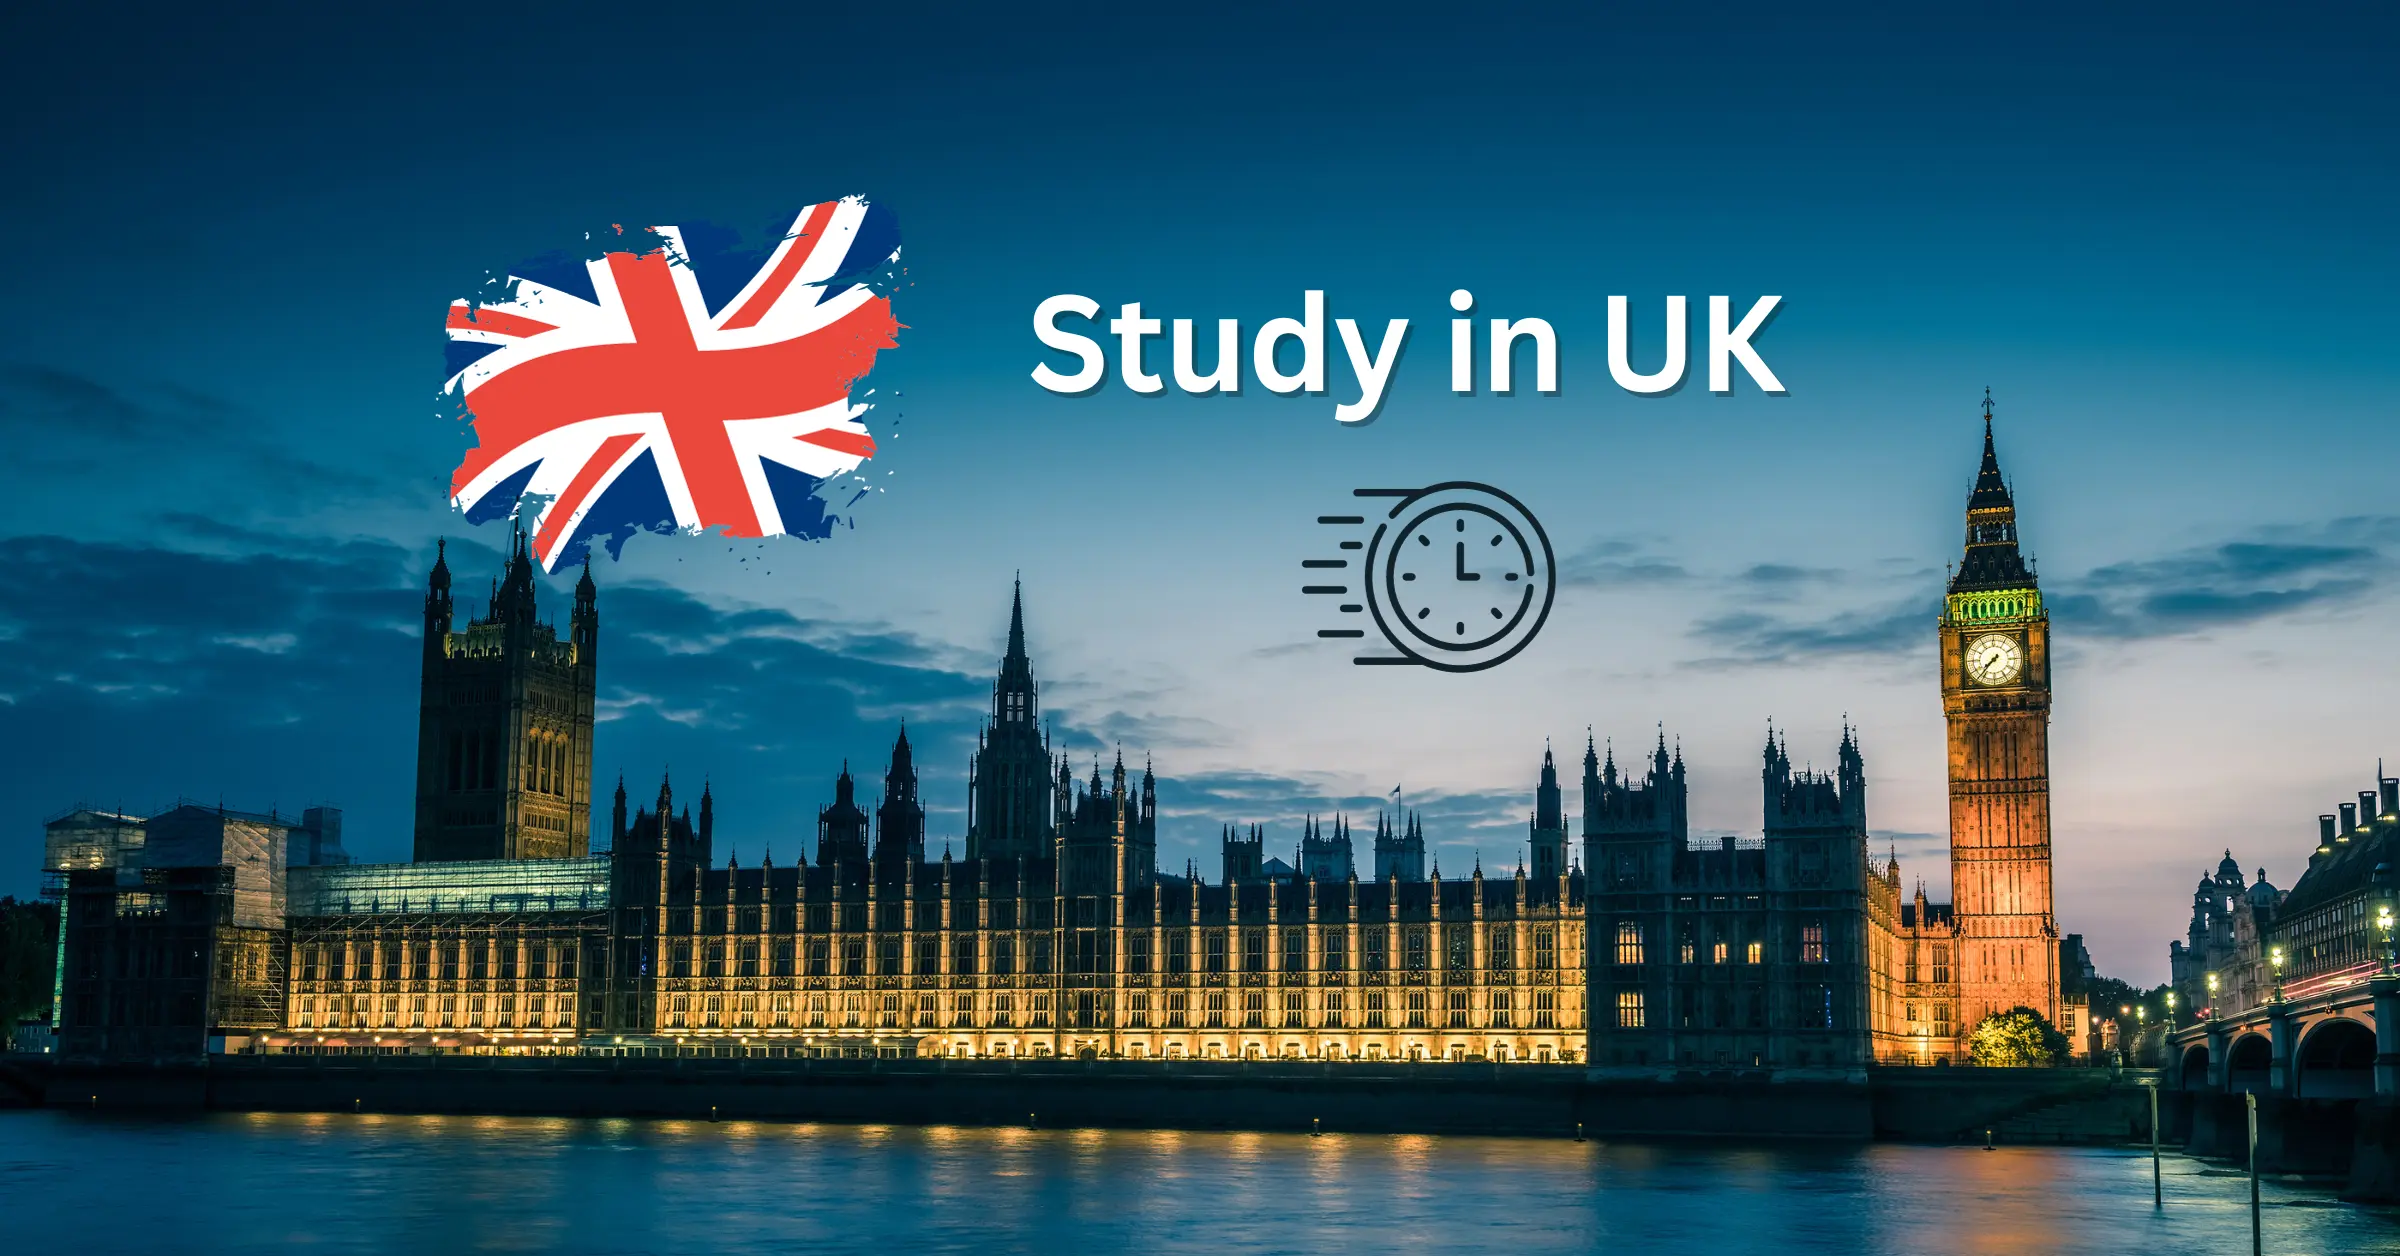 Study in UK - UK Education Consultants - UK Education Consultants in Hyderabad, Kodad and Khammam